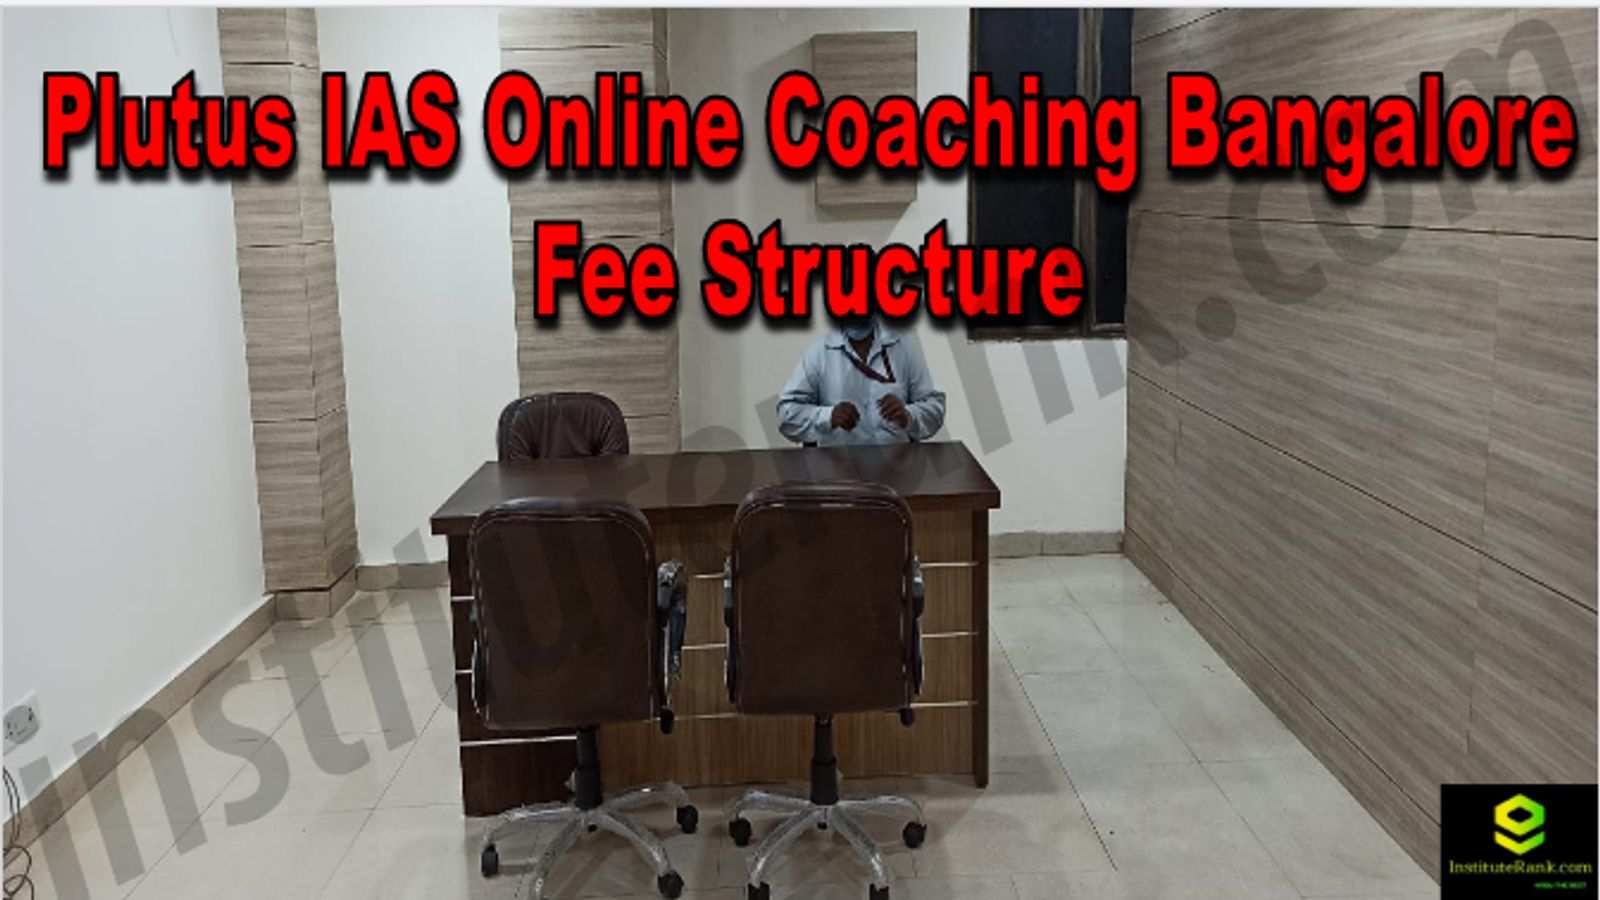 Plutus IAS Online Coaching Bangalore Reviews Fee Structure